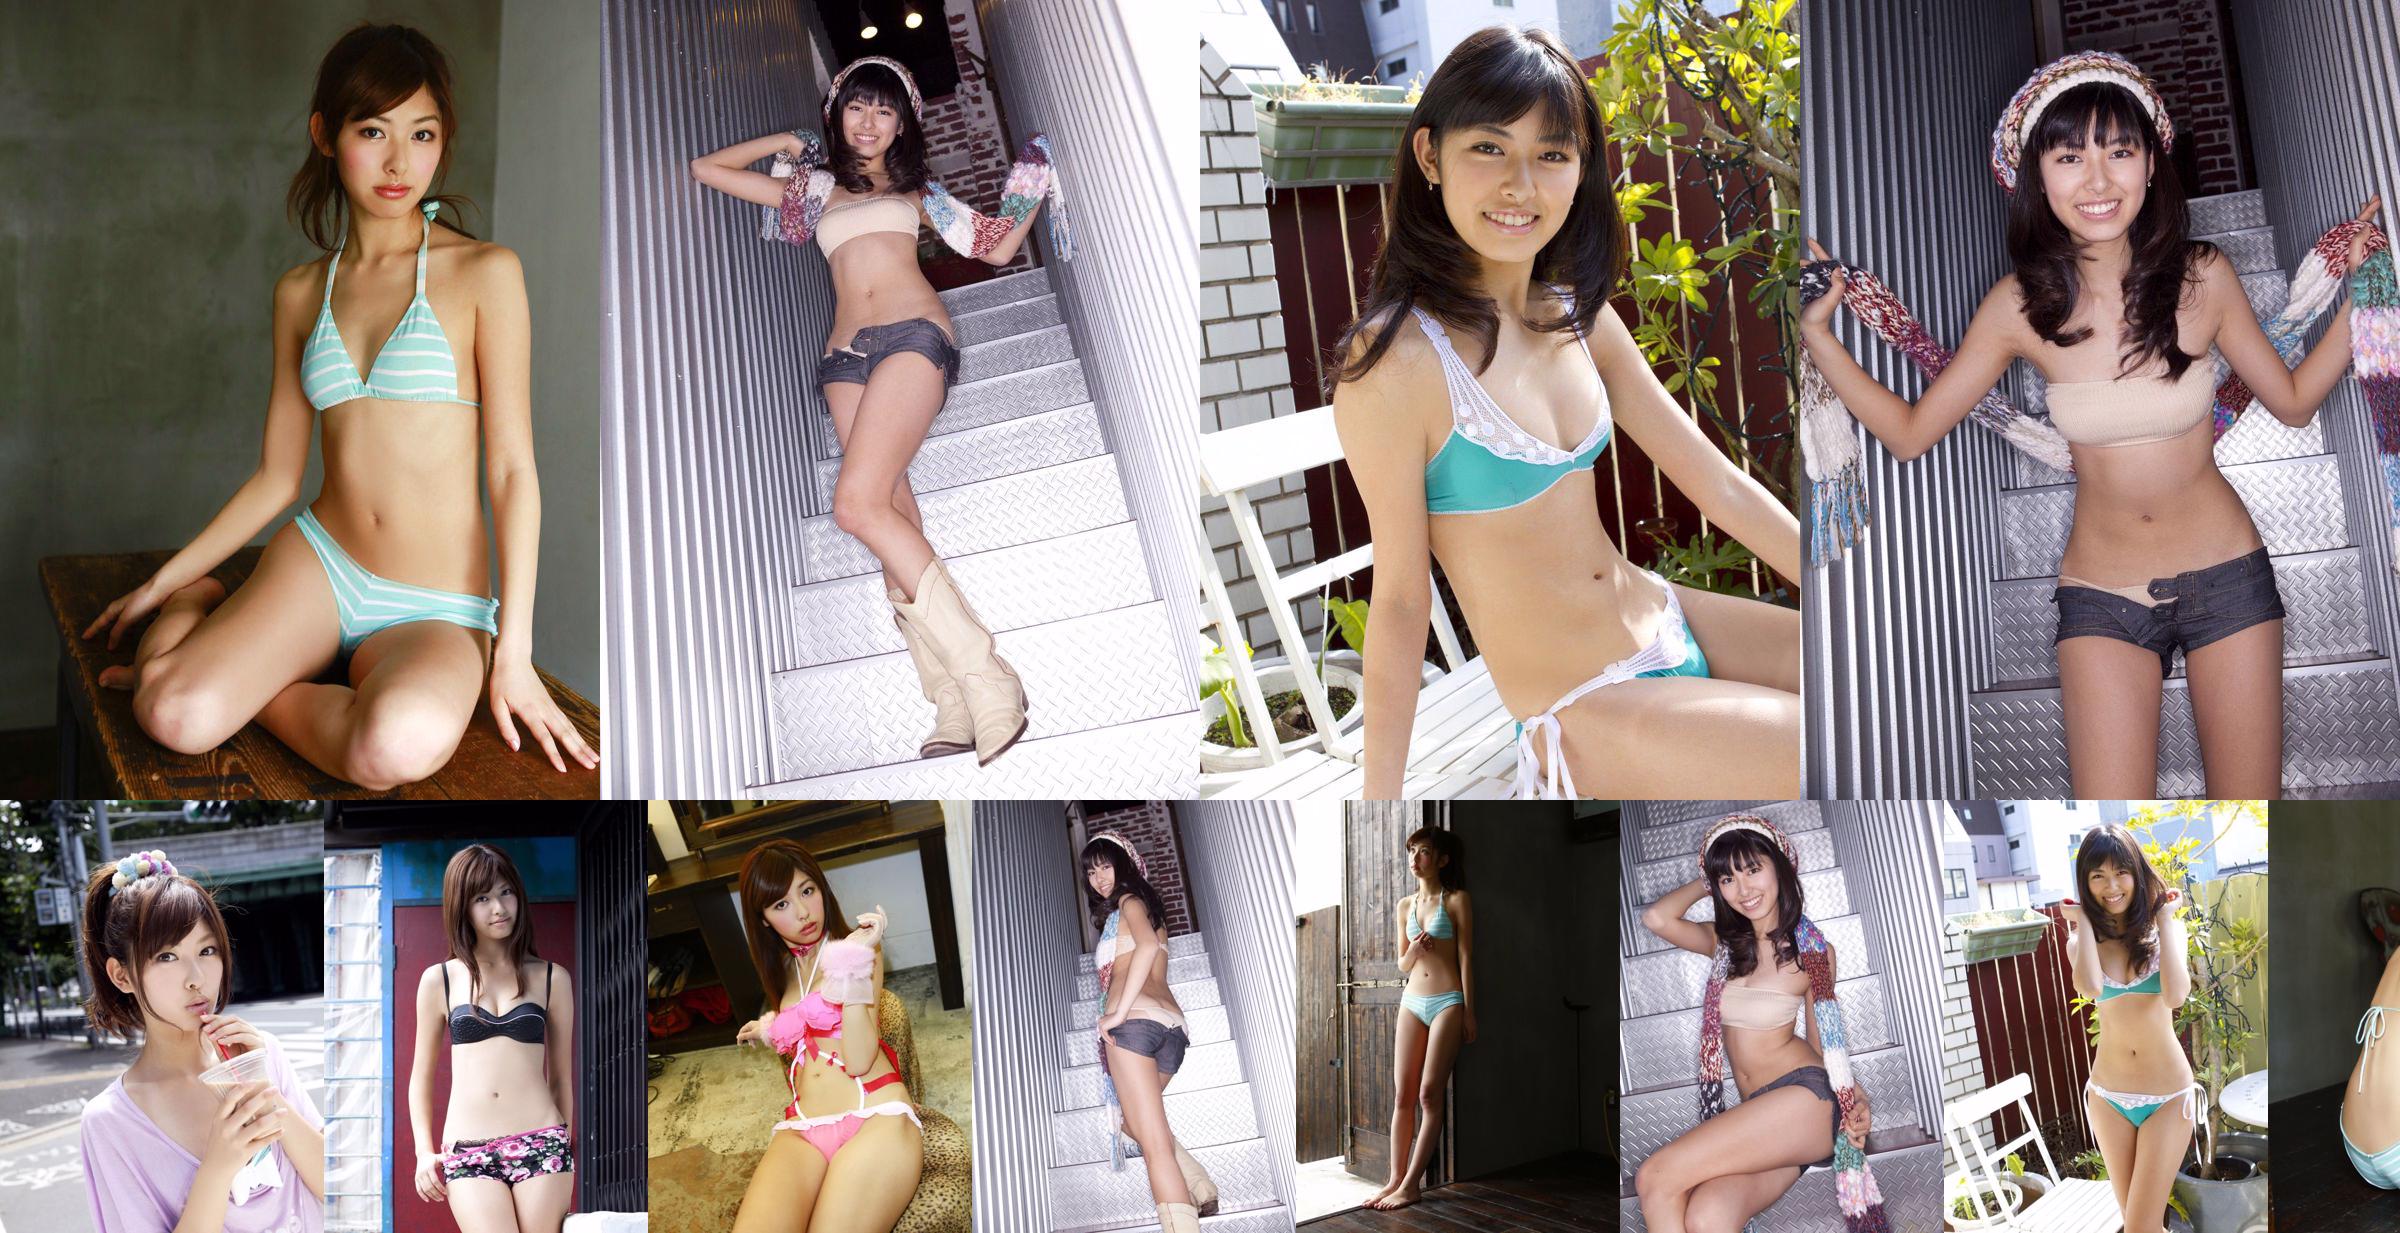 Yurika Tachibana / Yurika Tachibana „Be a Babe” [Sabra.net] Strictly Girls No.58db39 Strona 1